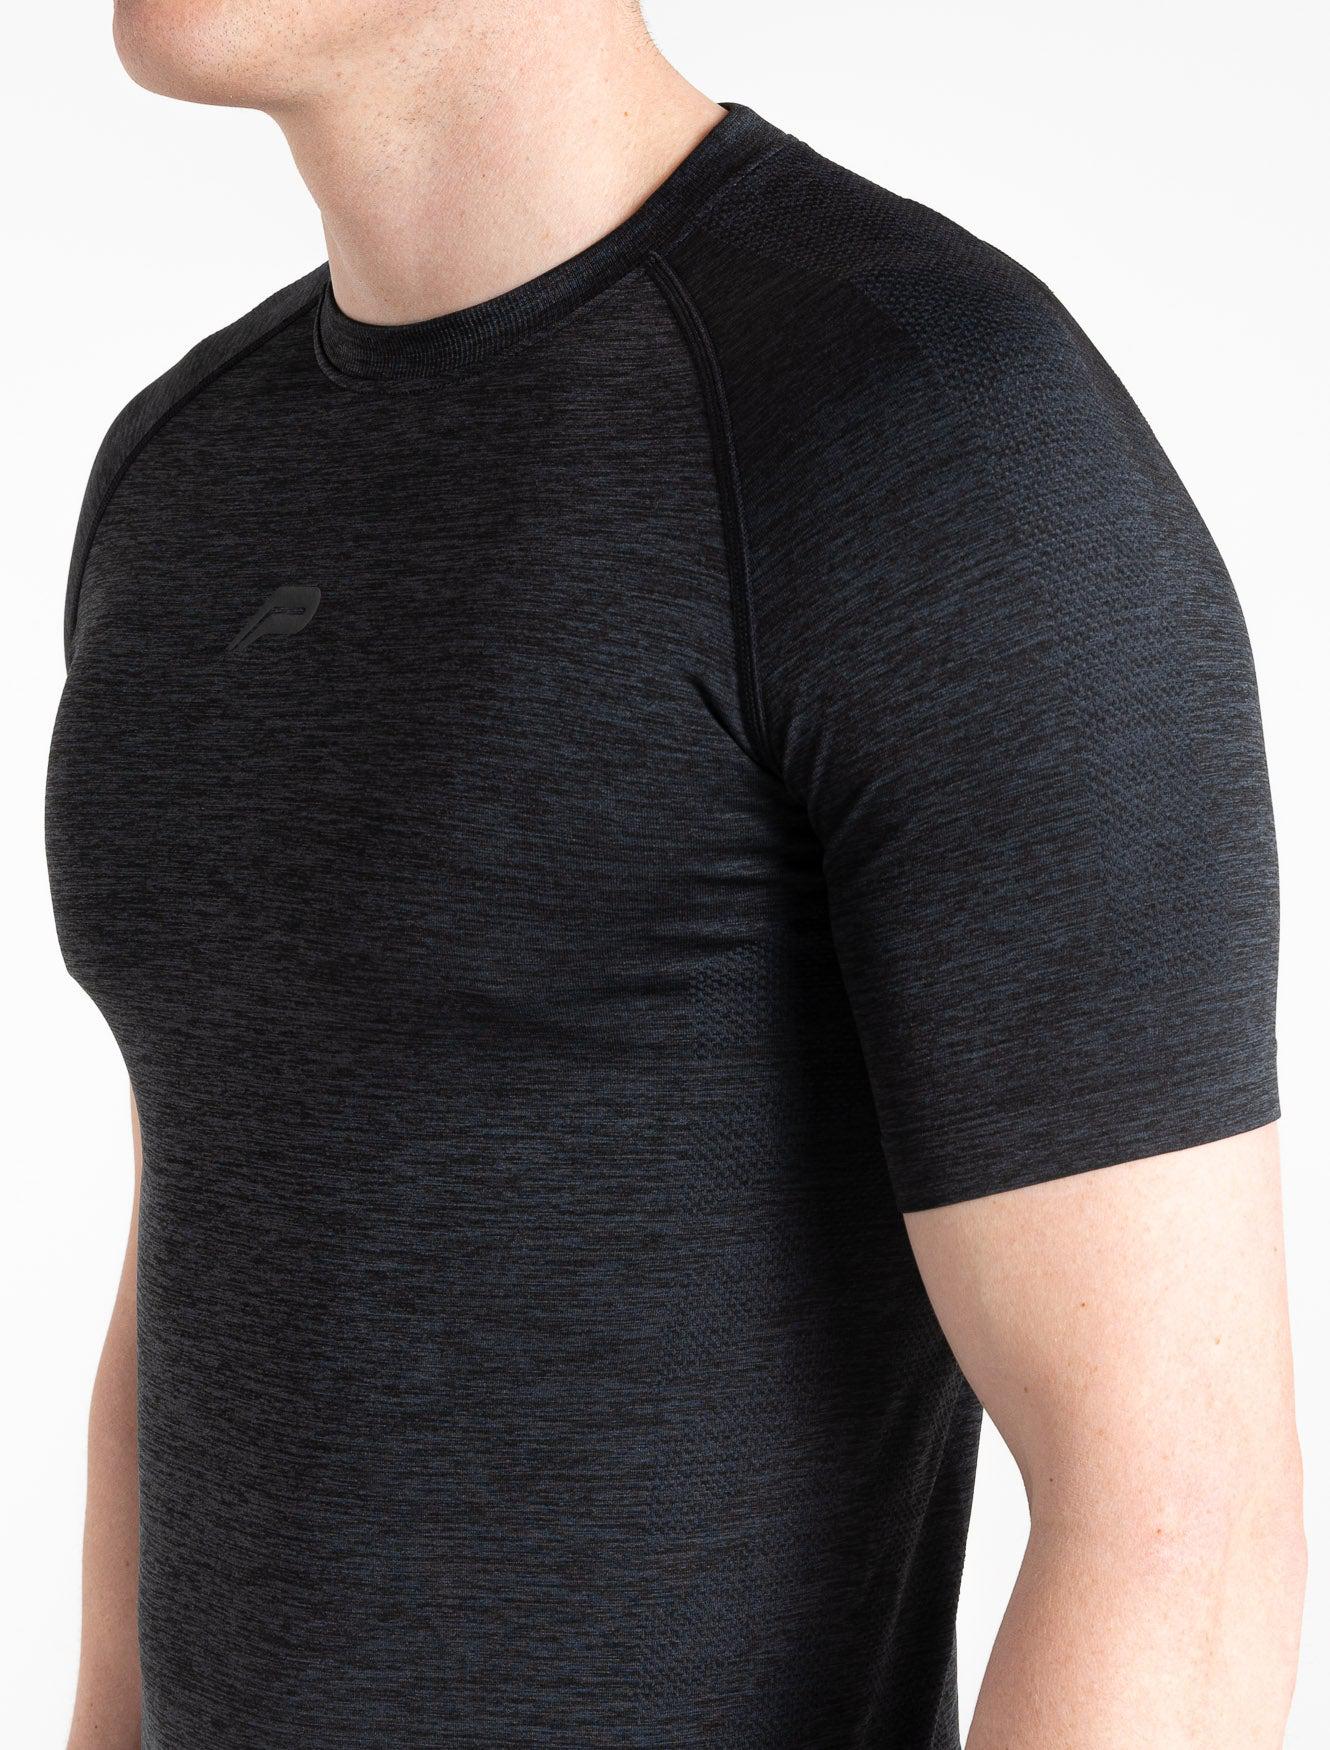 Intensity Seamless T-shirt / Black Marl Pursue Fitness 3